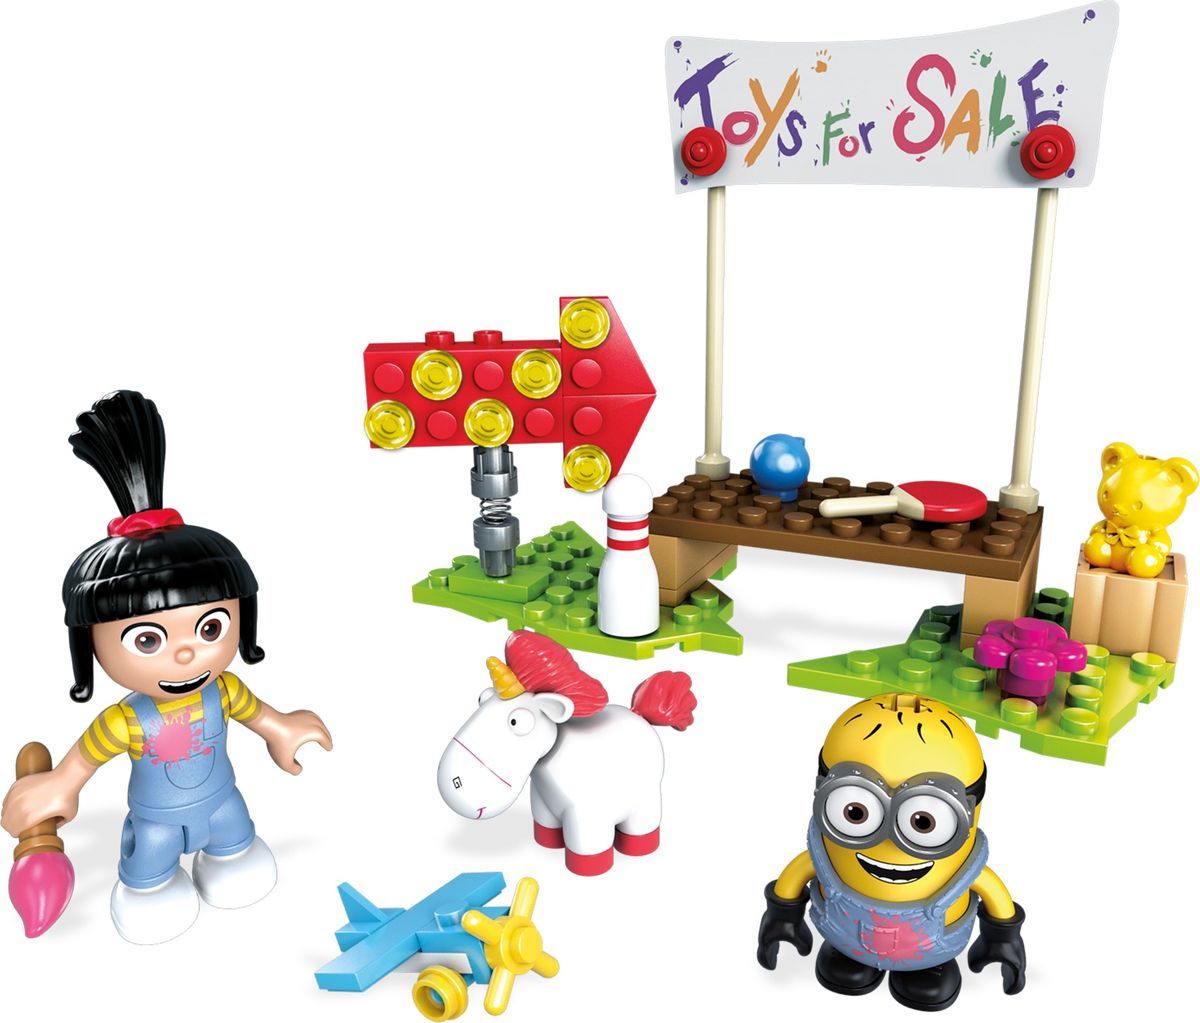 Mega Construx Boys    Agnes' Toy Sale